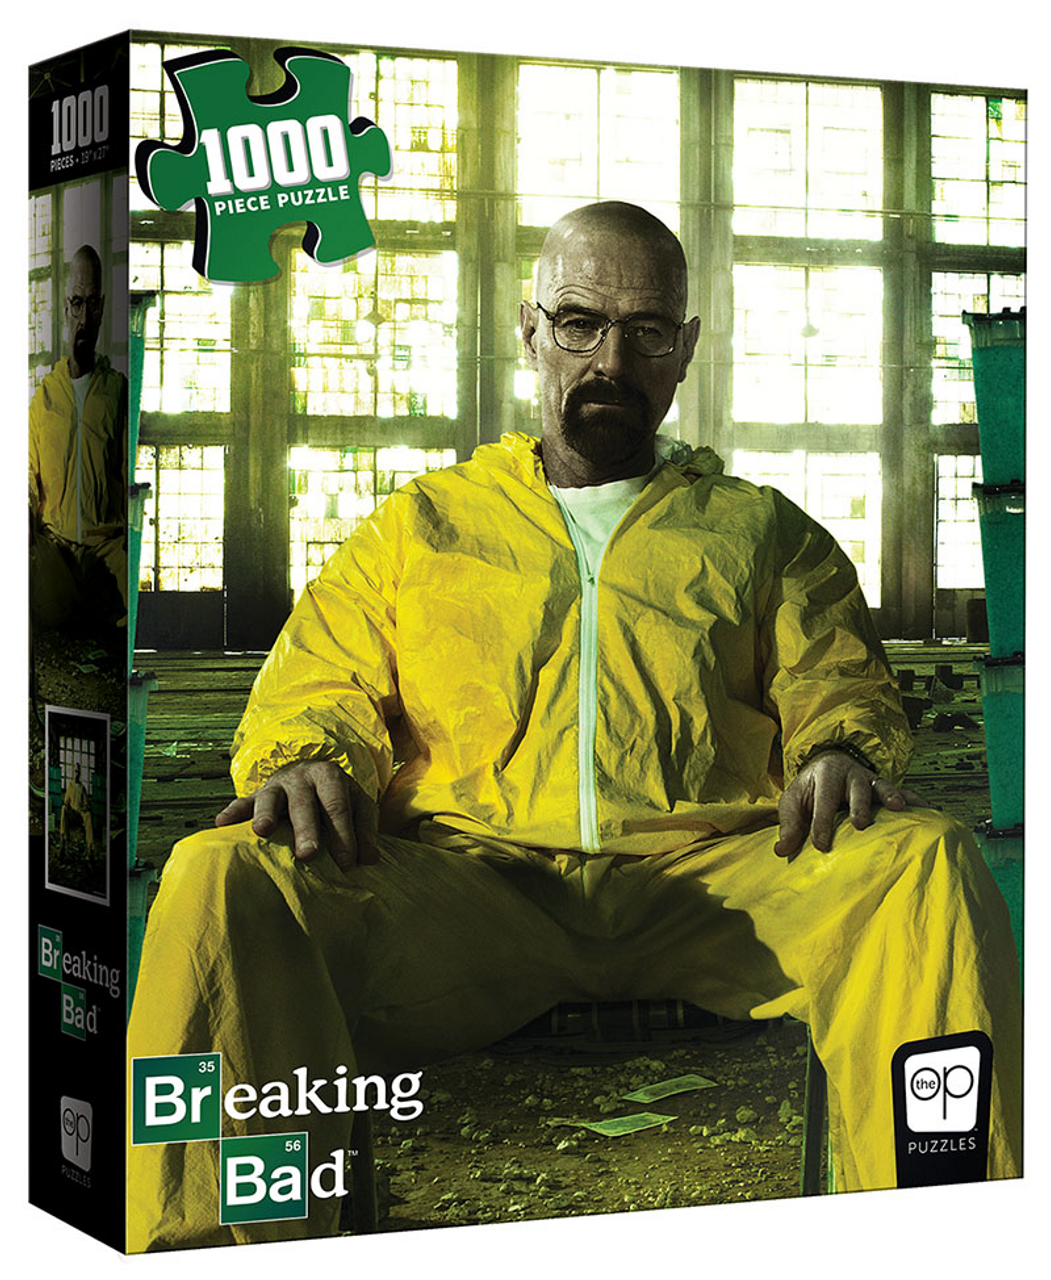 Breaking Bad “Breaking Bad” 1000 Piece Puzzle